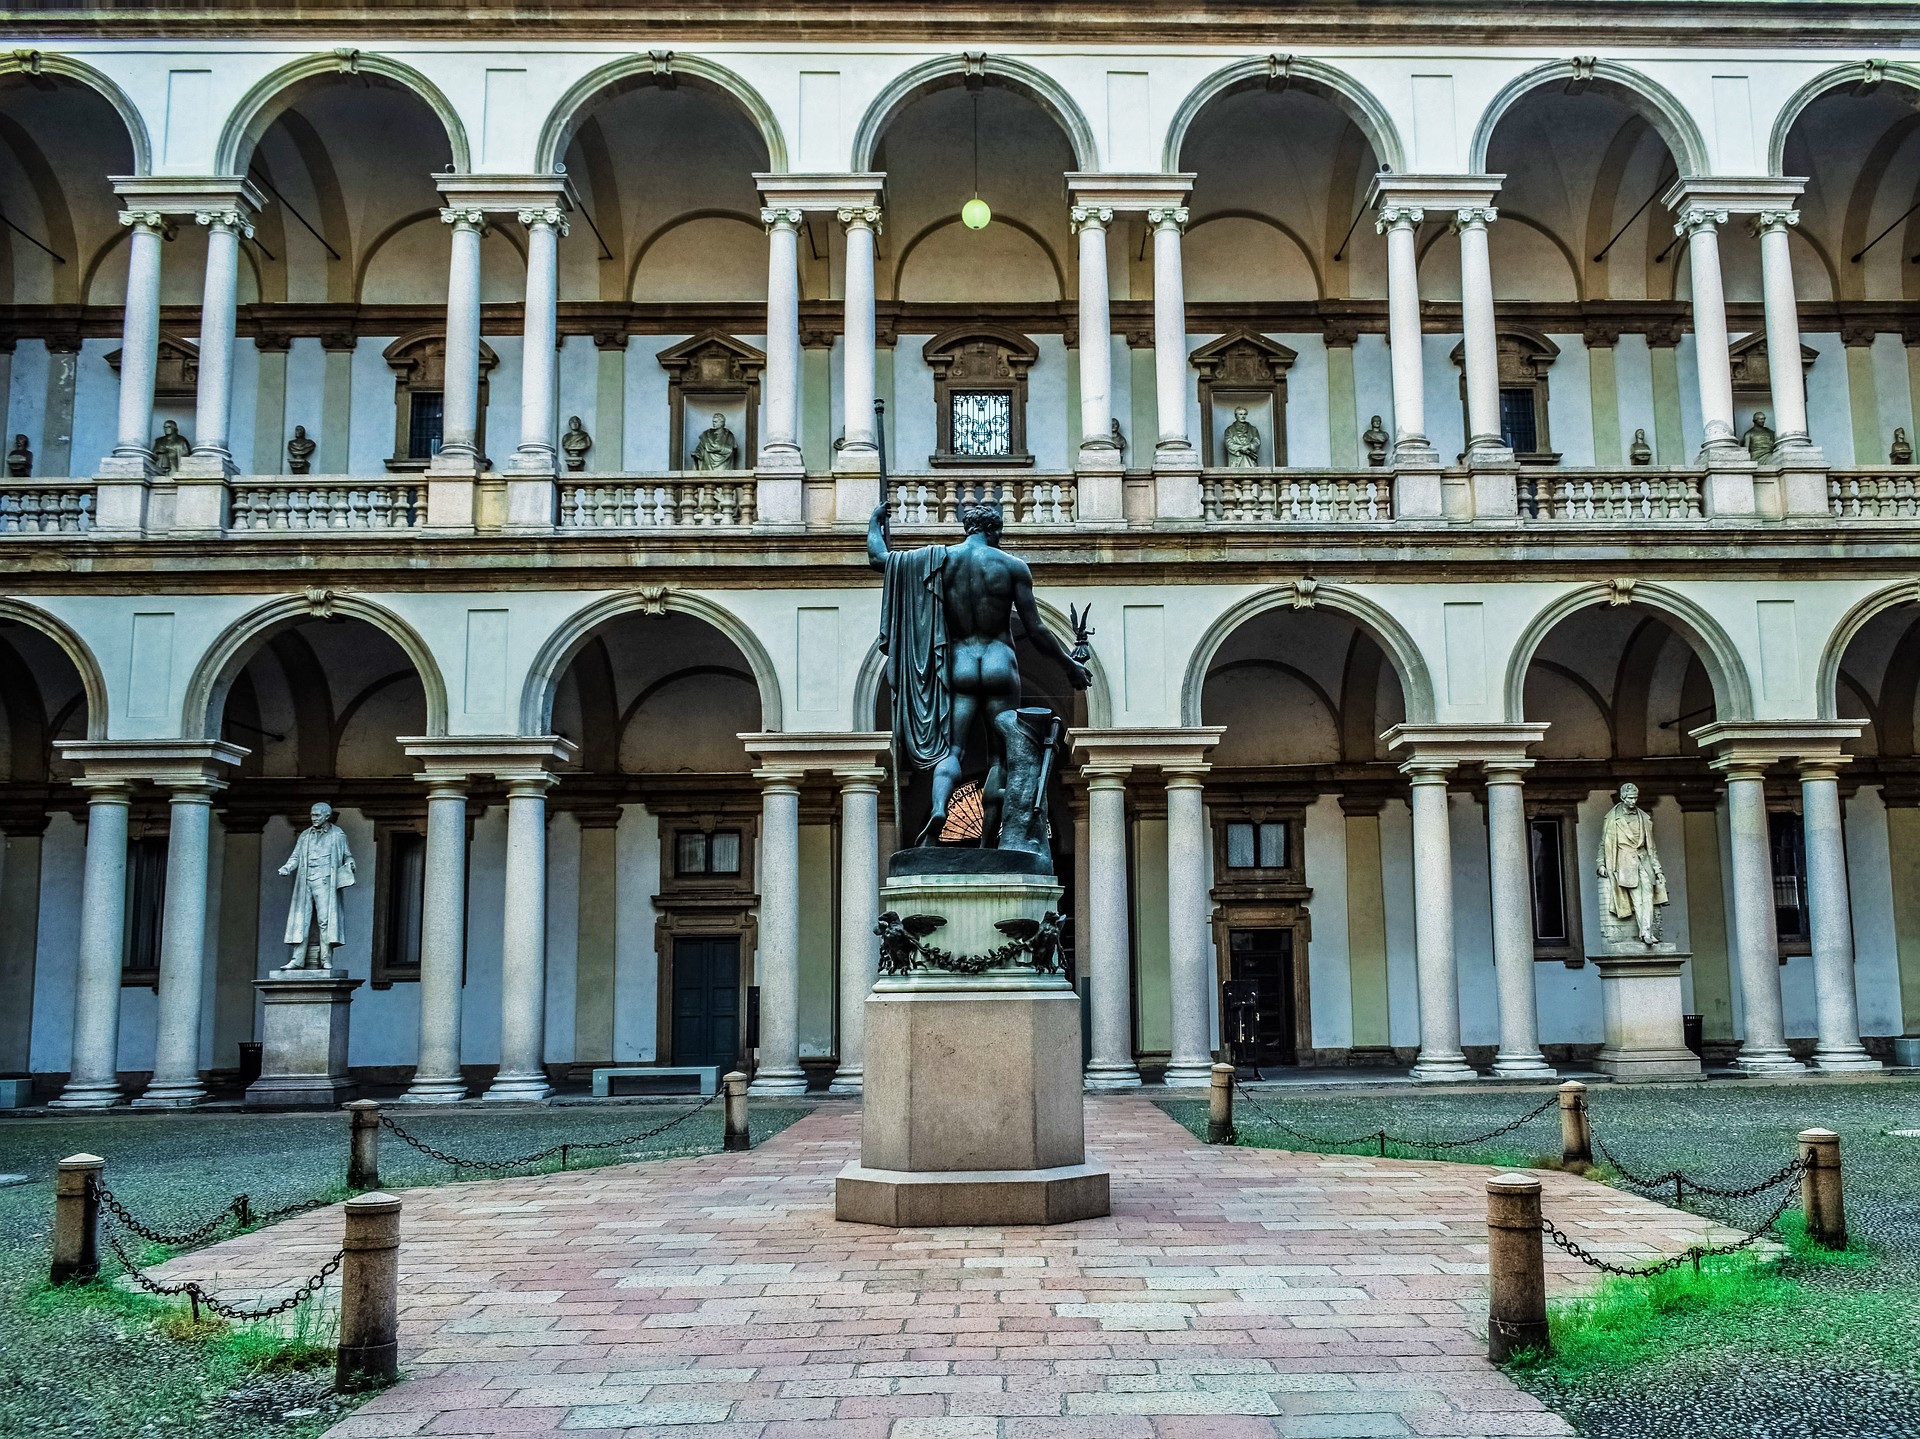 Impressive Pinacoteca di Brera - The Brera Art Gallery in Milan, Italy